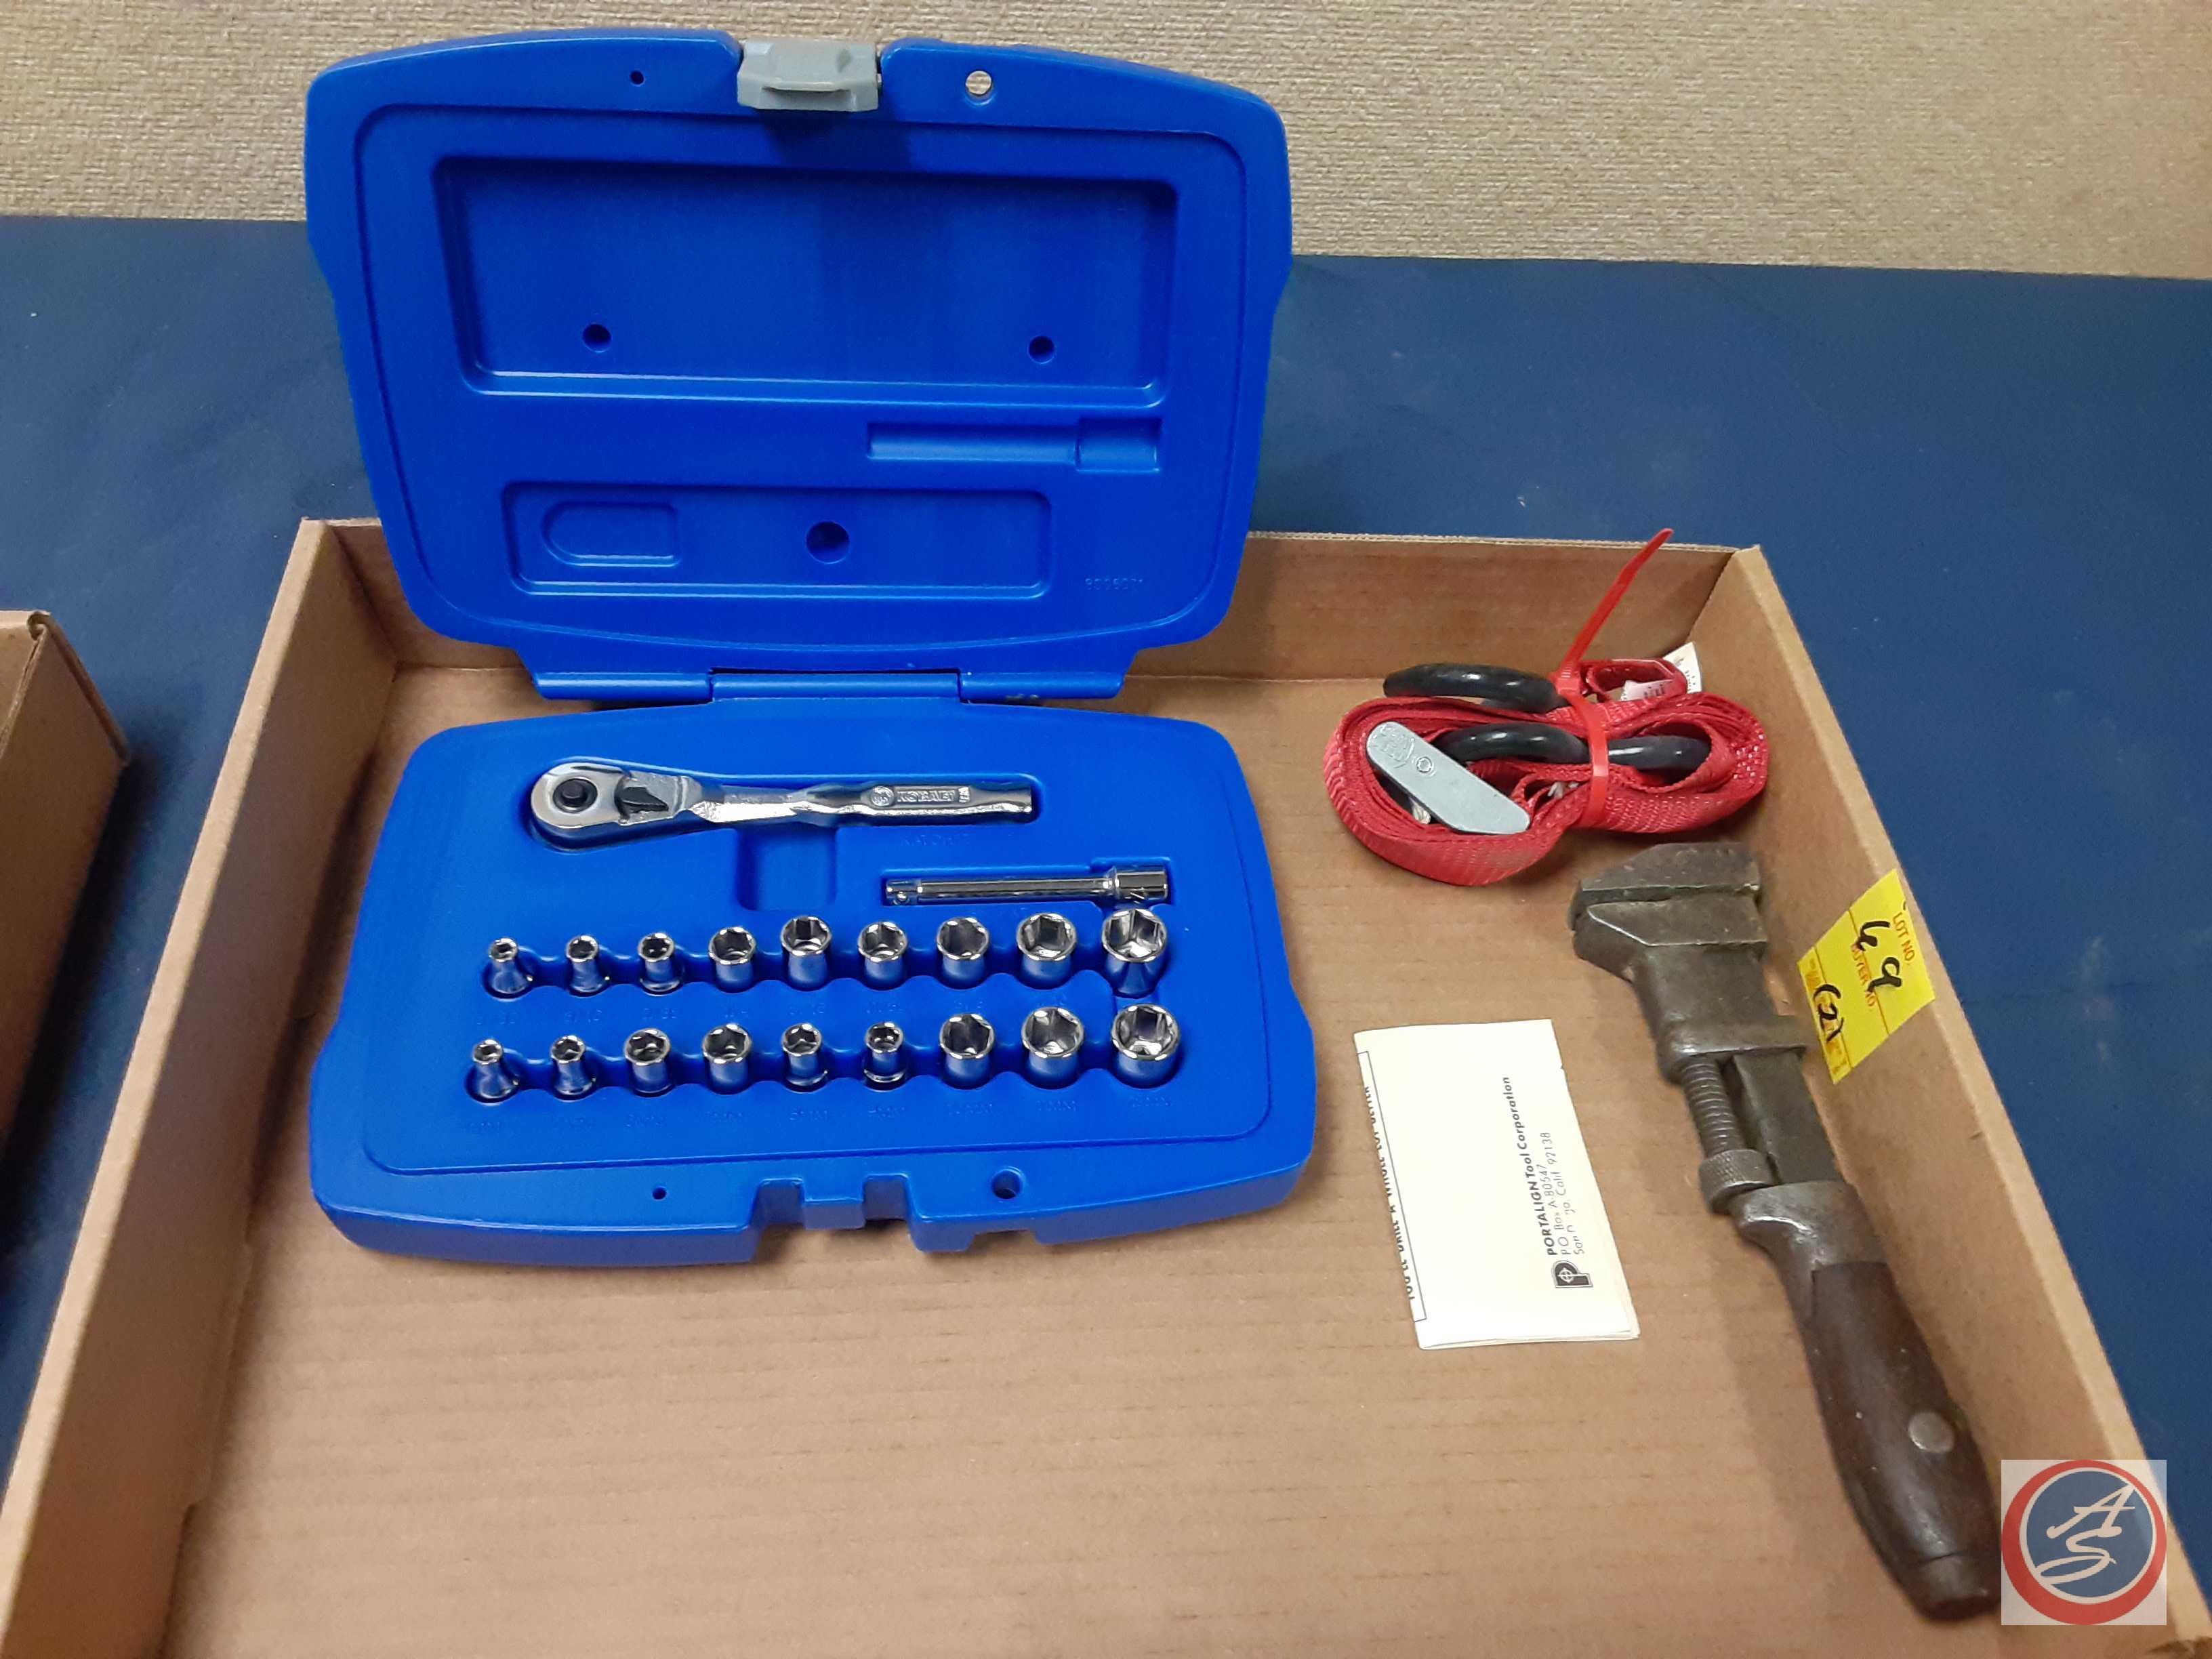 Hammer, Screwdrivers, Pliers, Drill Bits, Jig Saw Blades, Craftsman Assortment of Tools in Metal